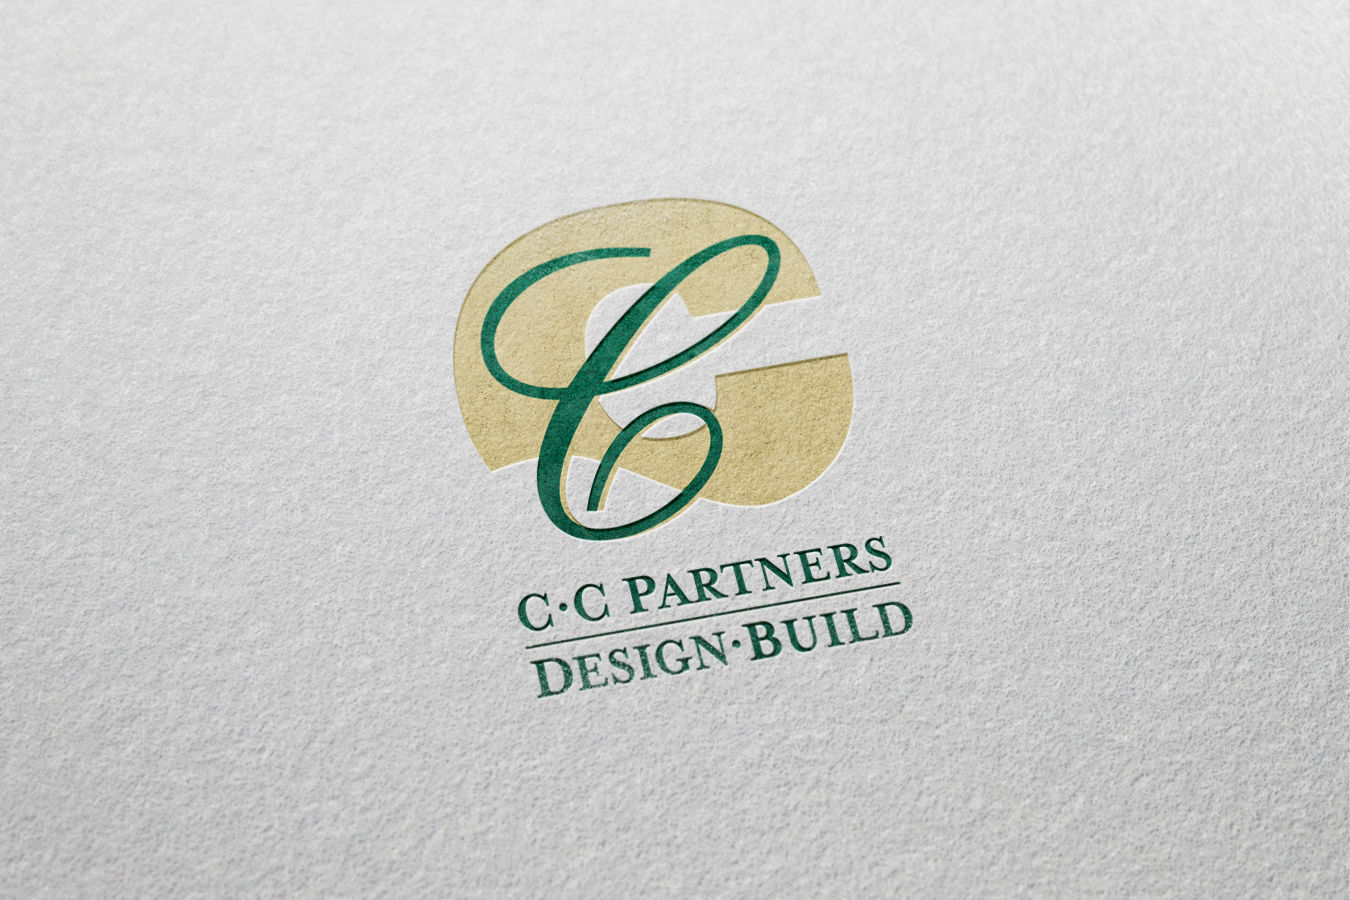 C & C Partners, Inc.